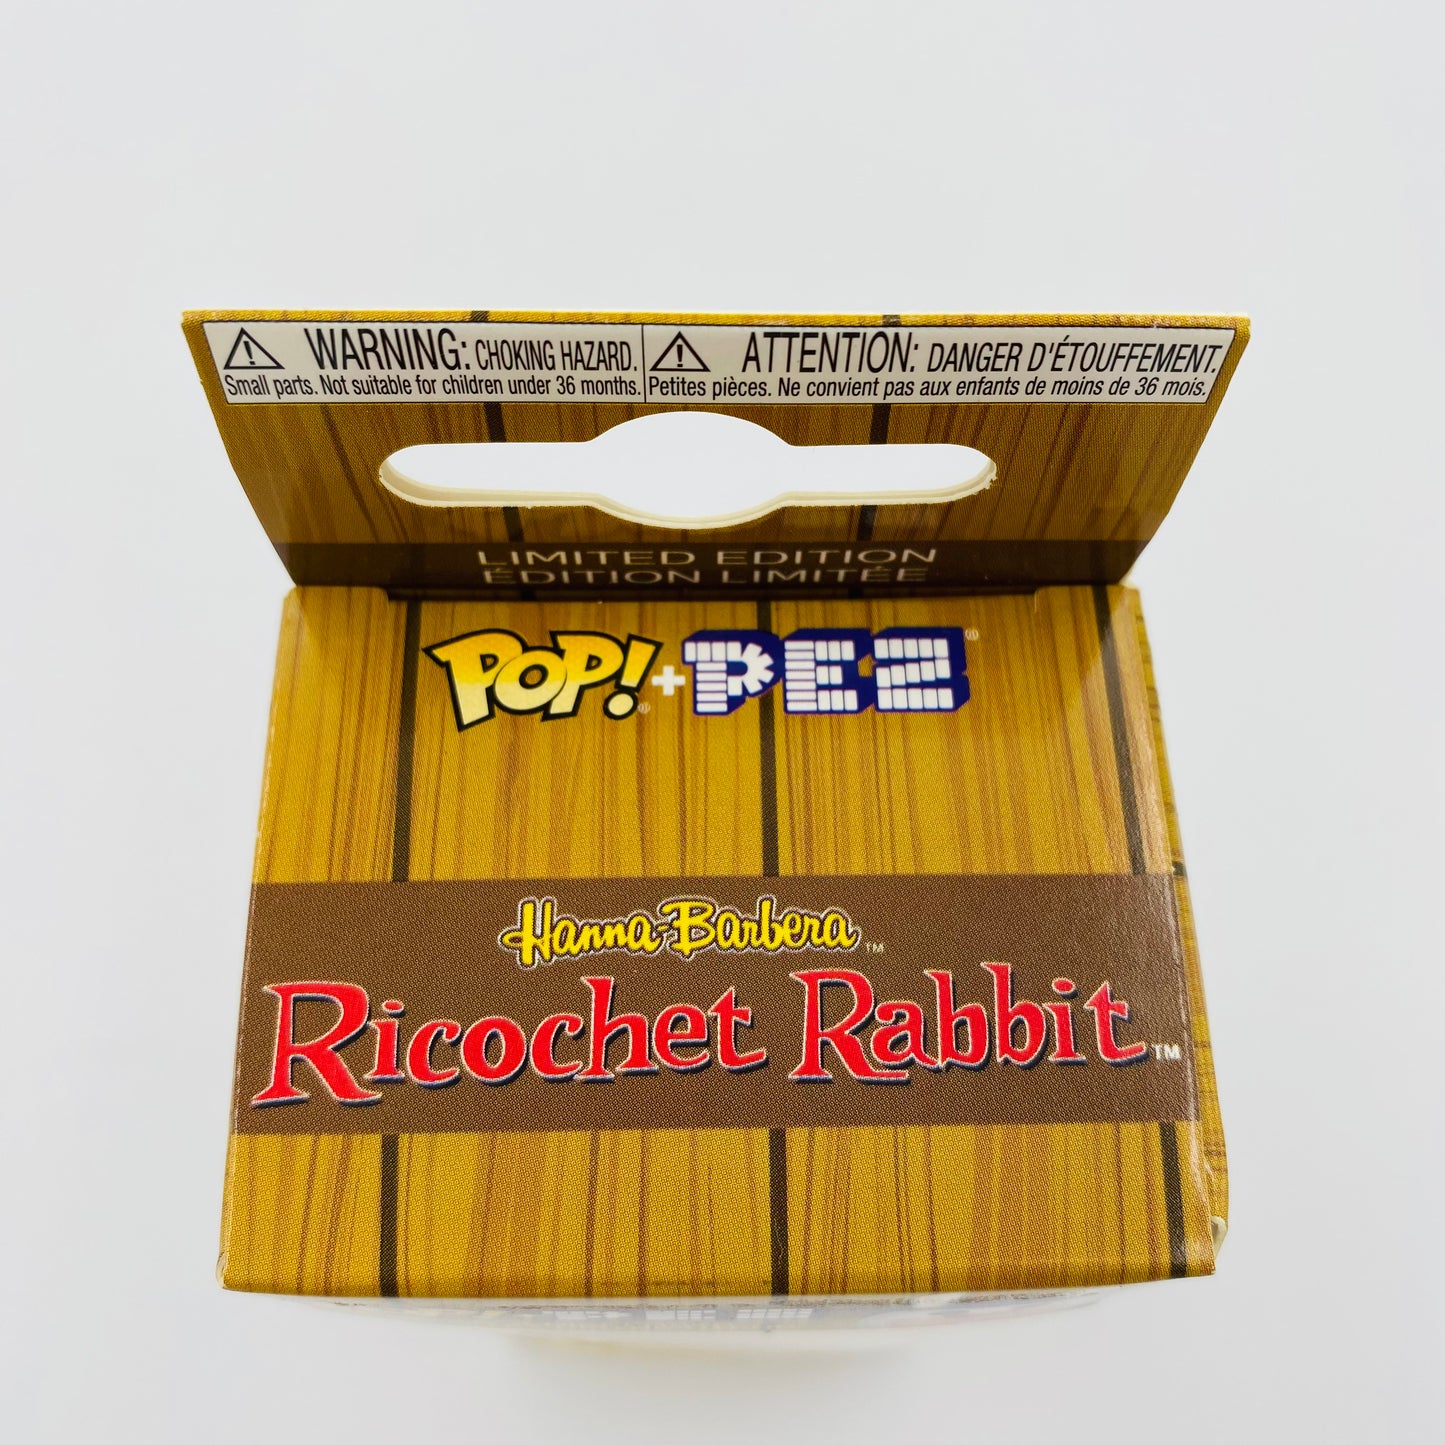 Hanna-Barbera Ricochet Rabbit Pop! + PEZ dispenser (2019) boxed